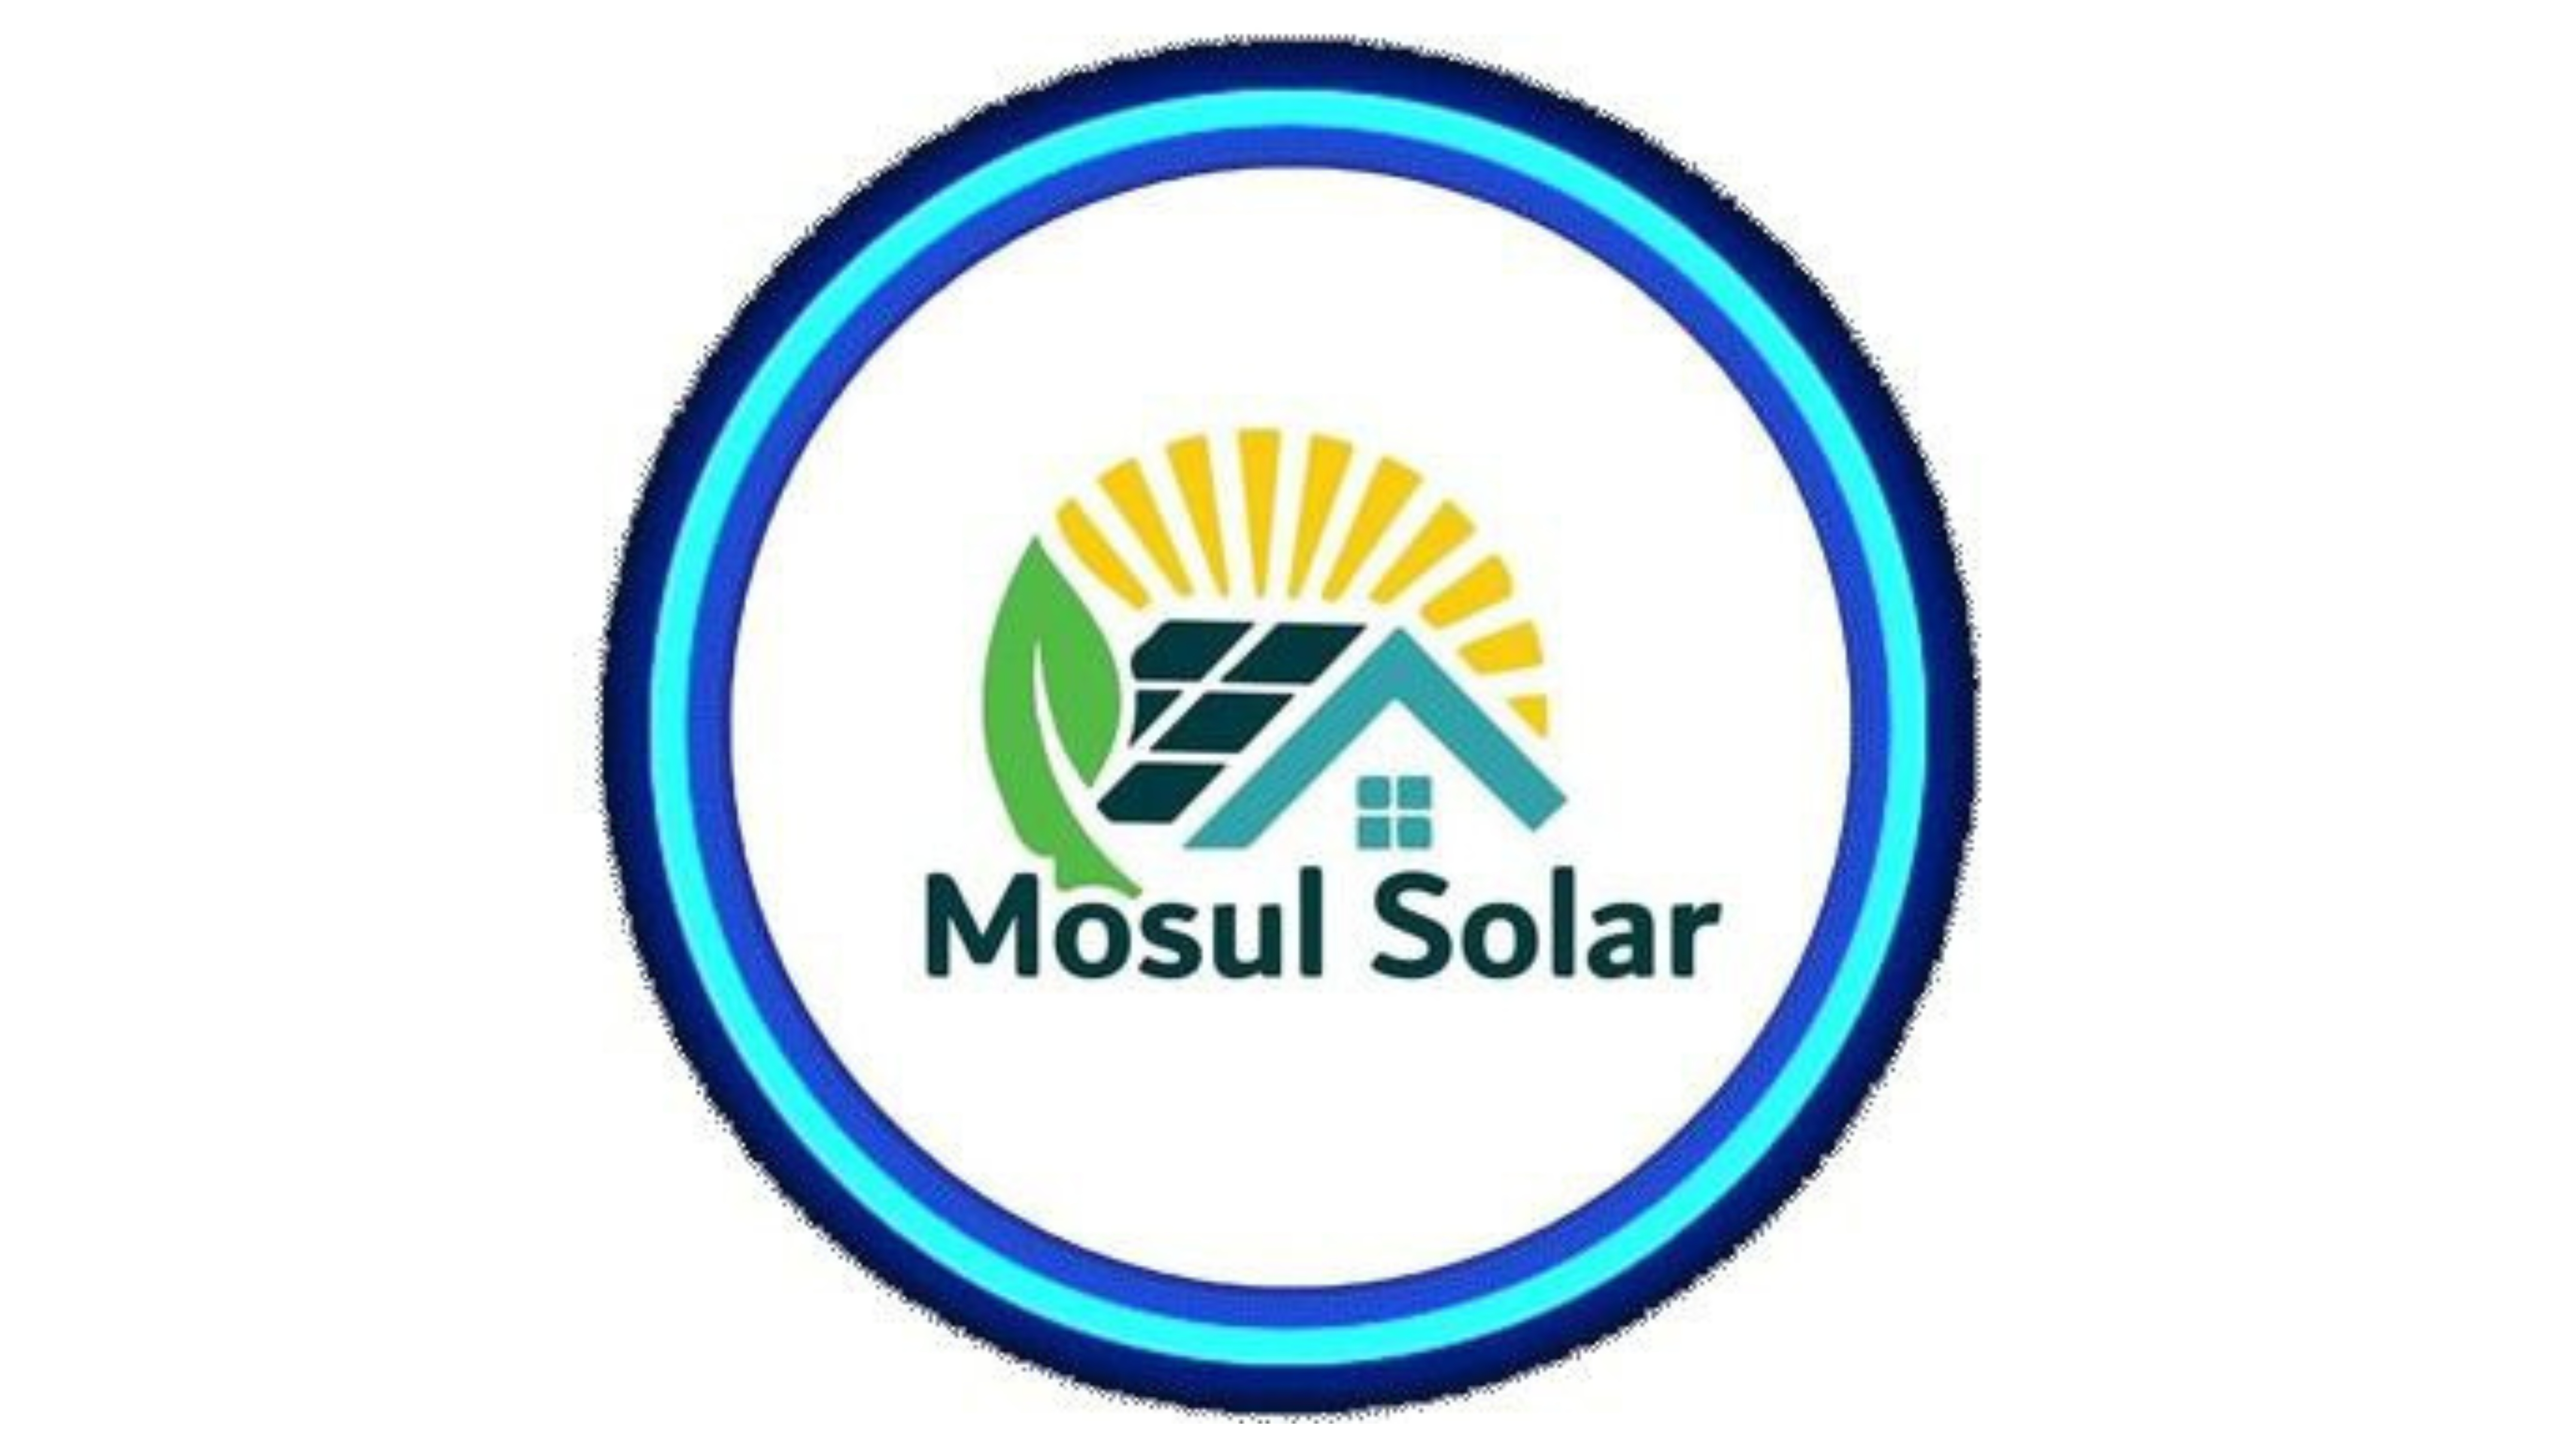 Mosul solar